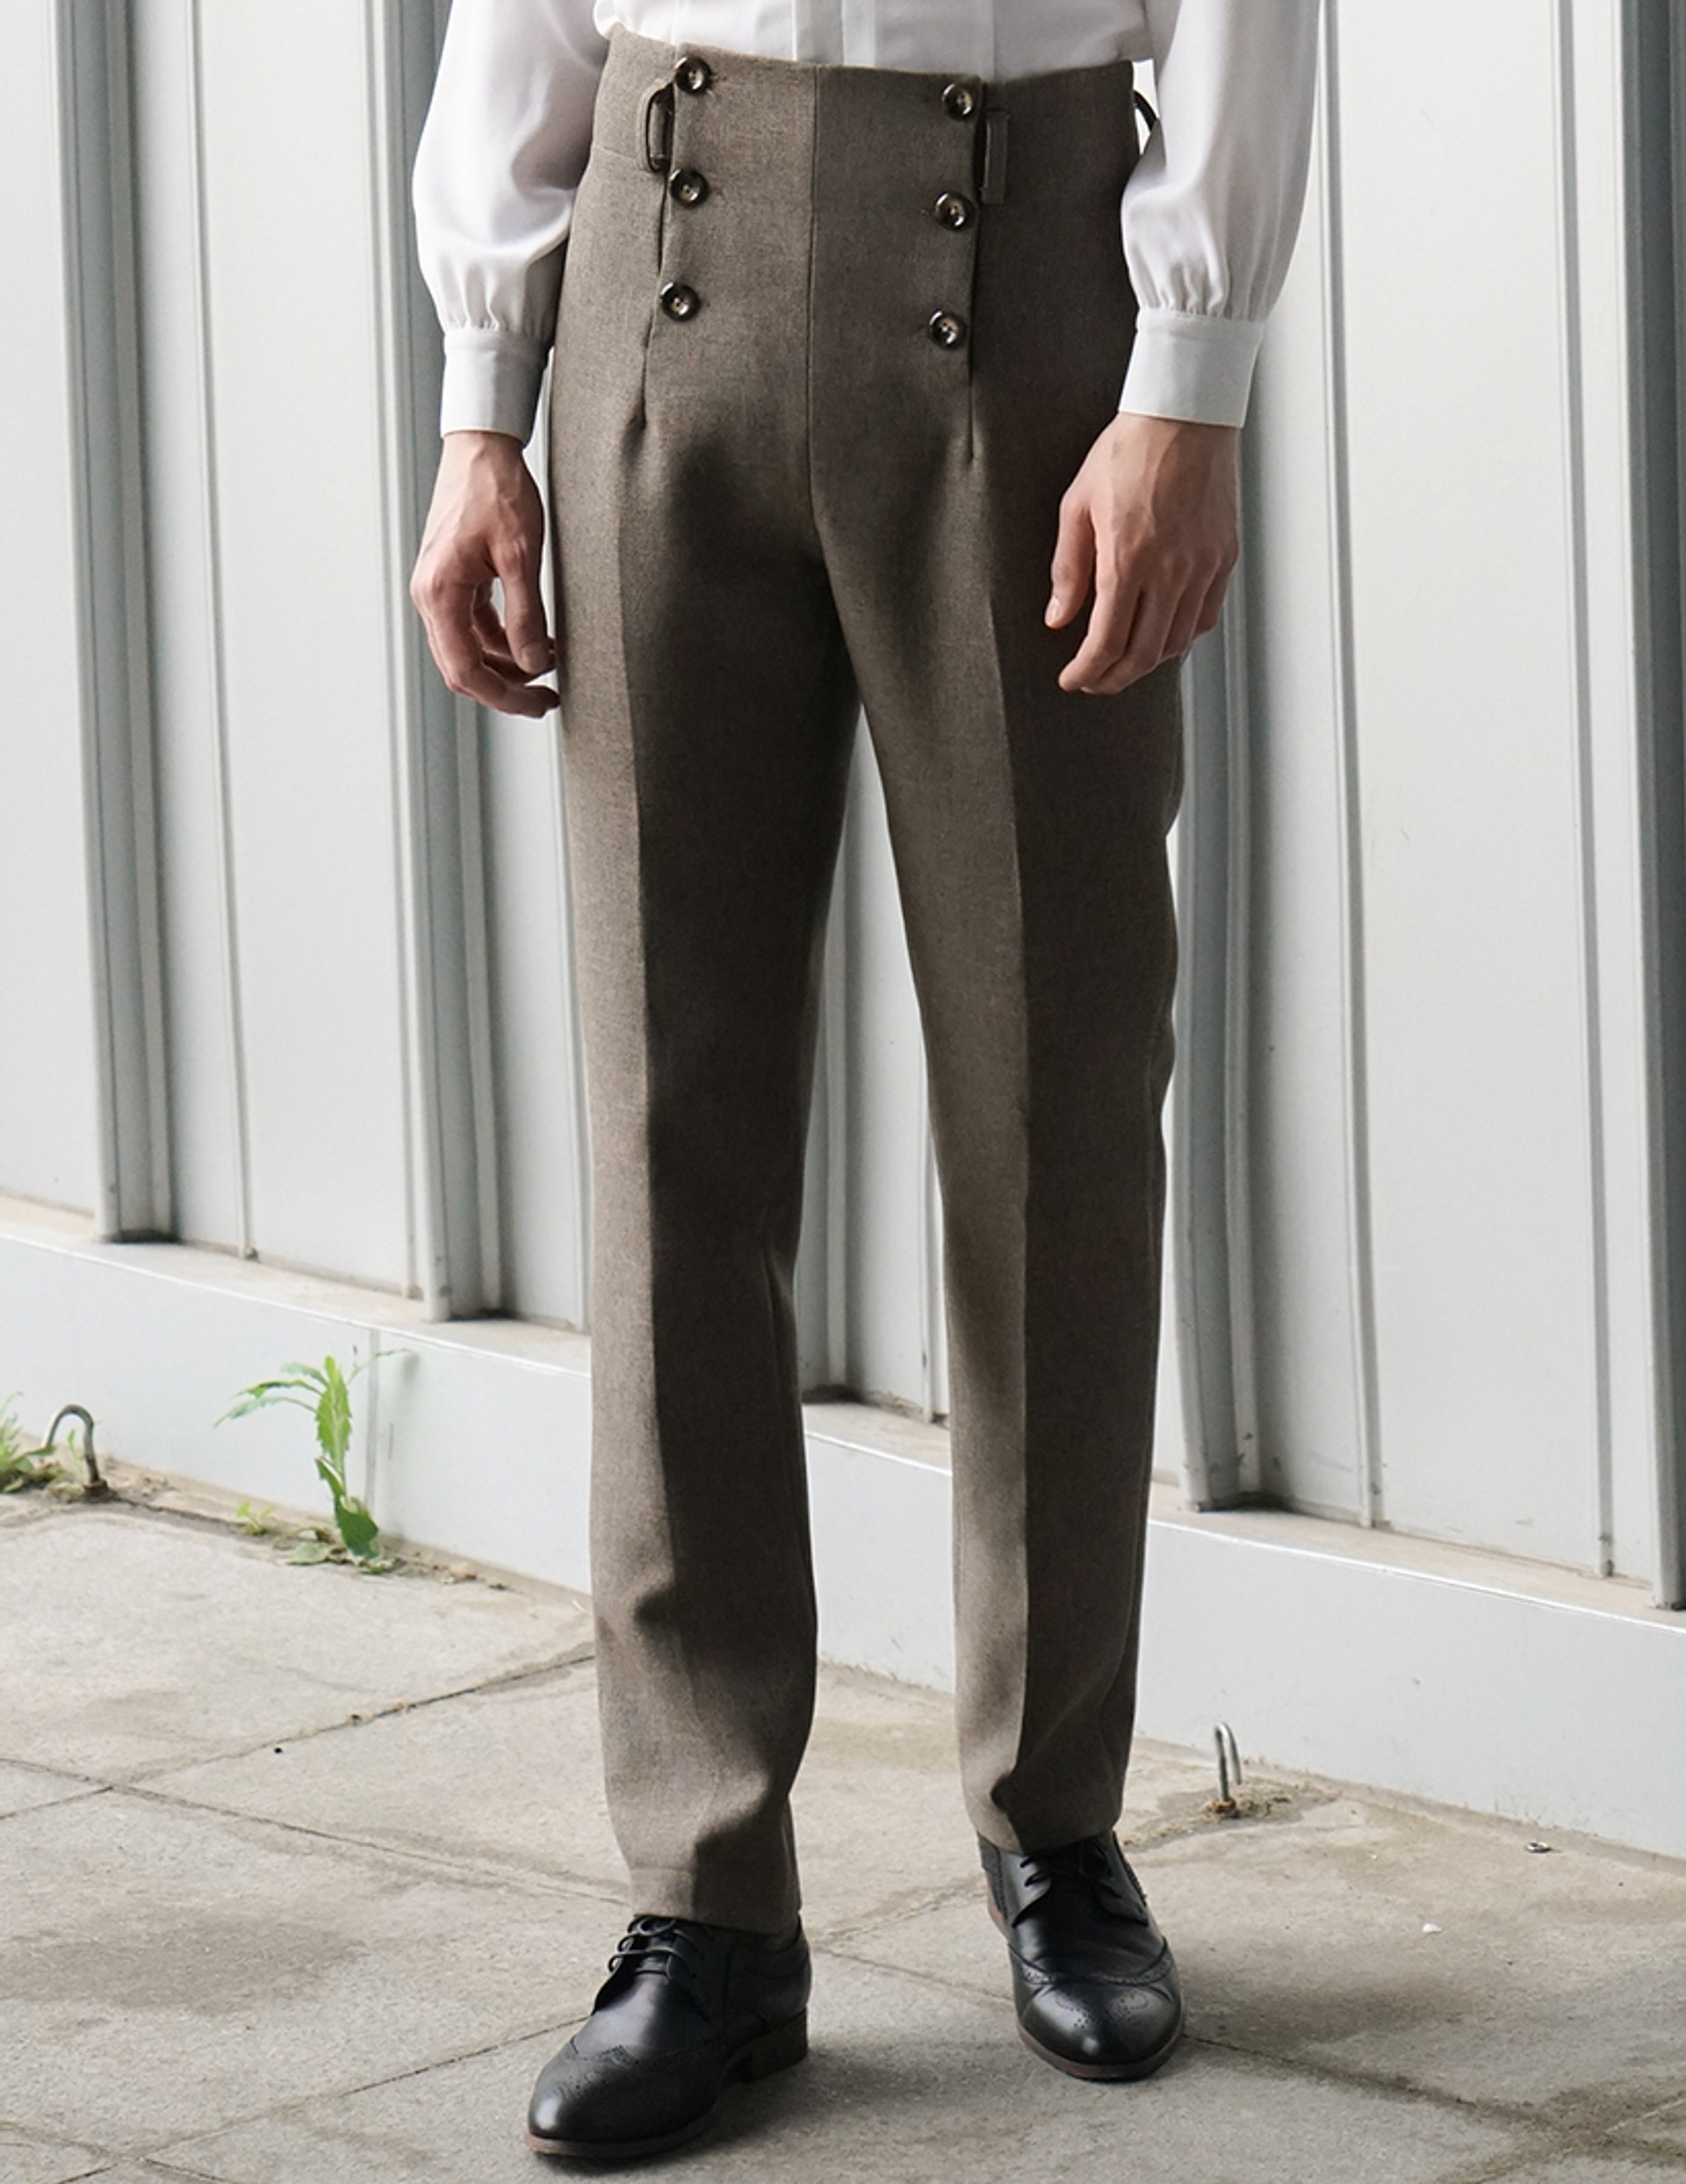 Elegant Gothic Aristocrat Dandy Steampunk Fake Leather Short Spats for Man